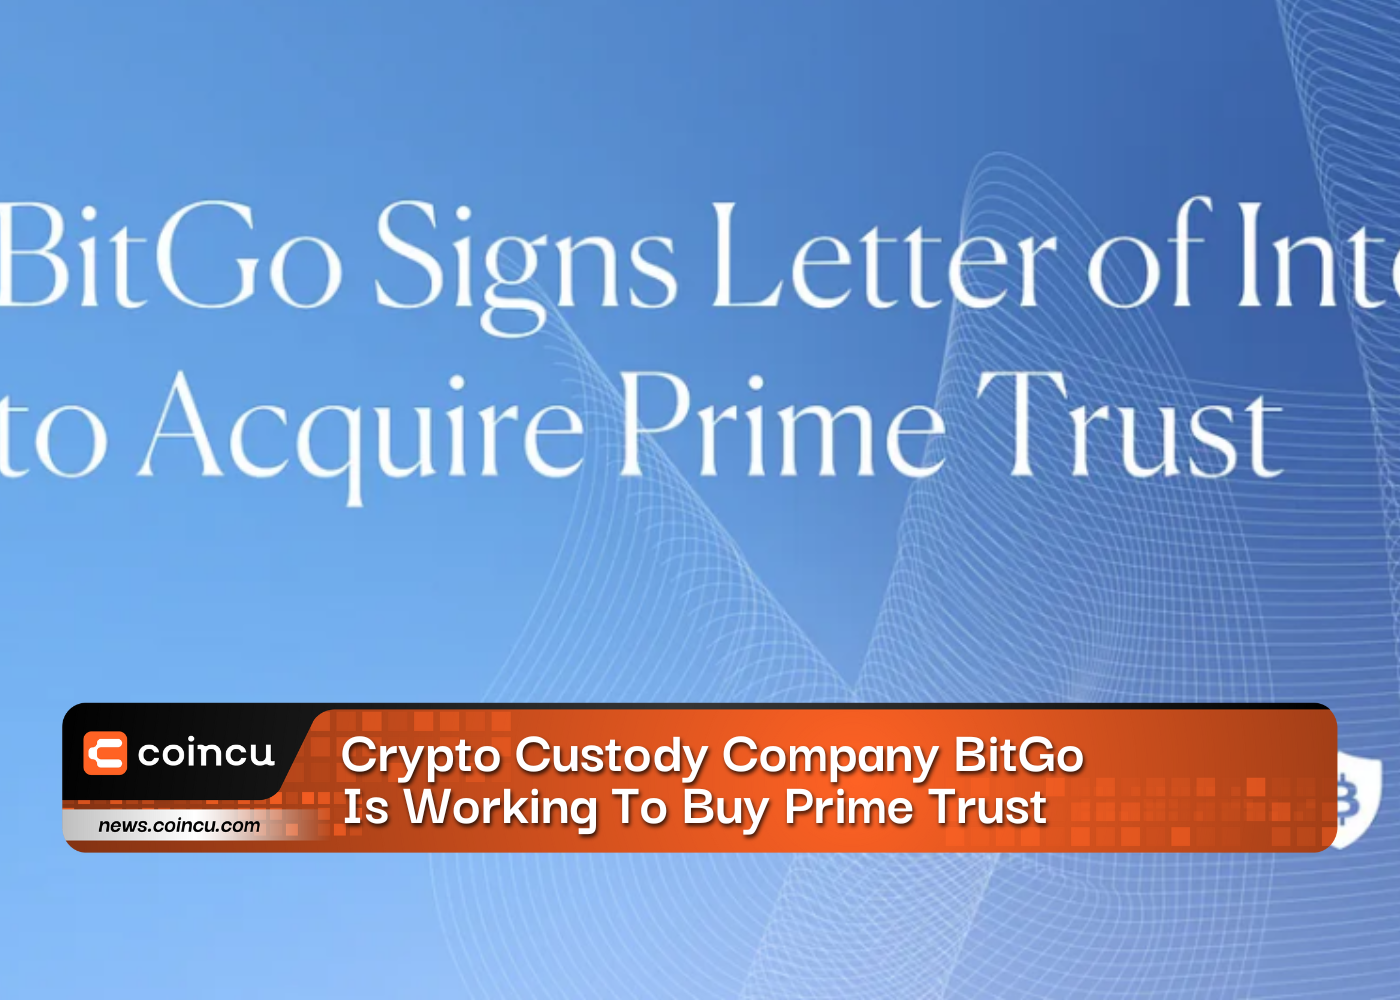 Crypto Custody Company BitGo Is Working To Buy Prime Trust